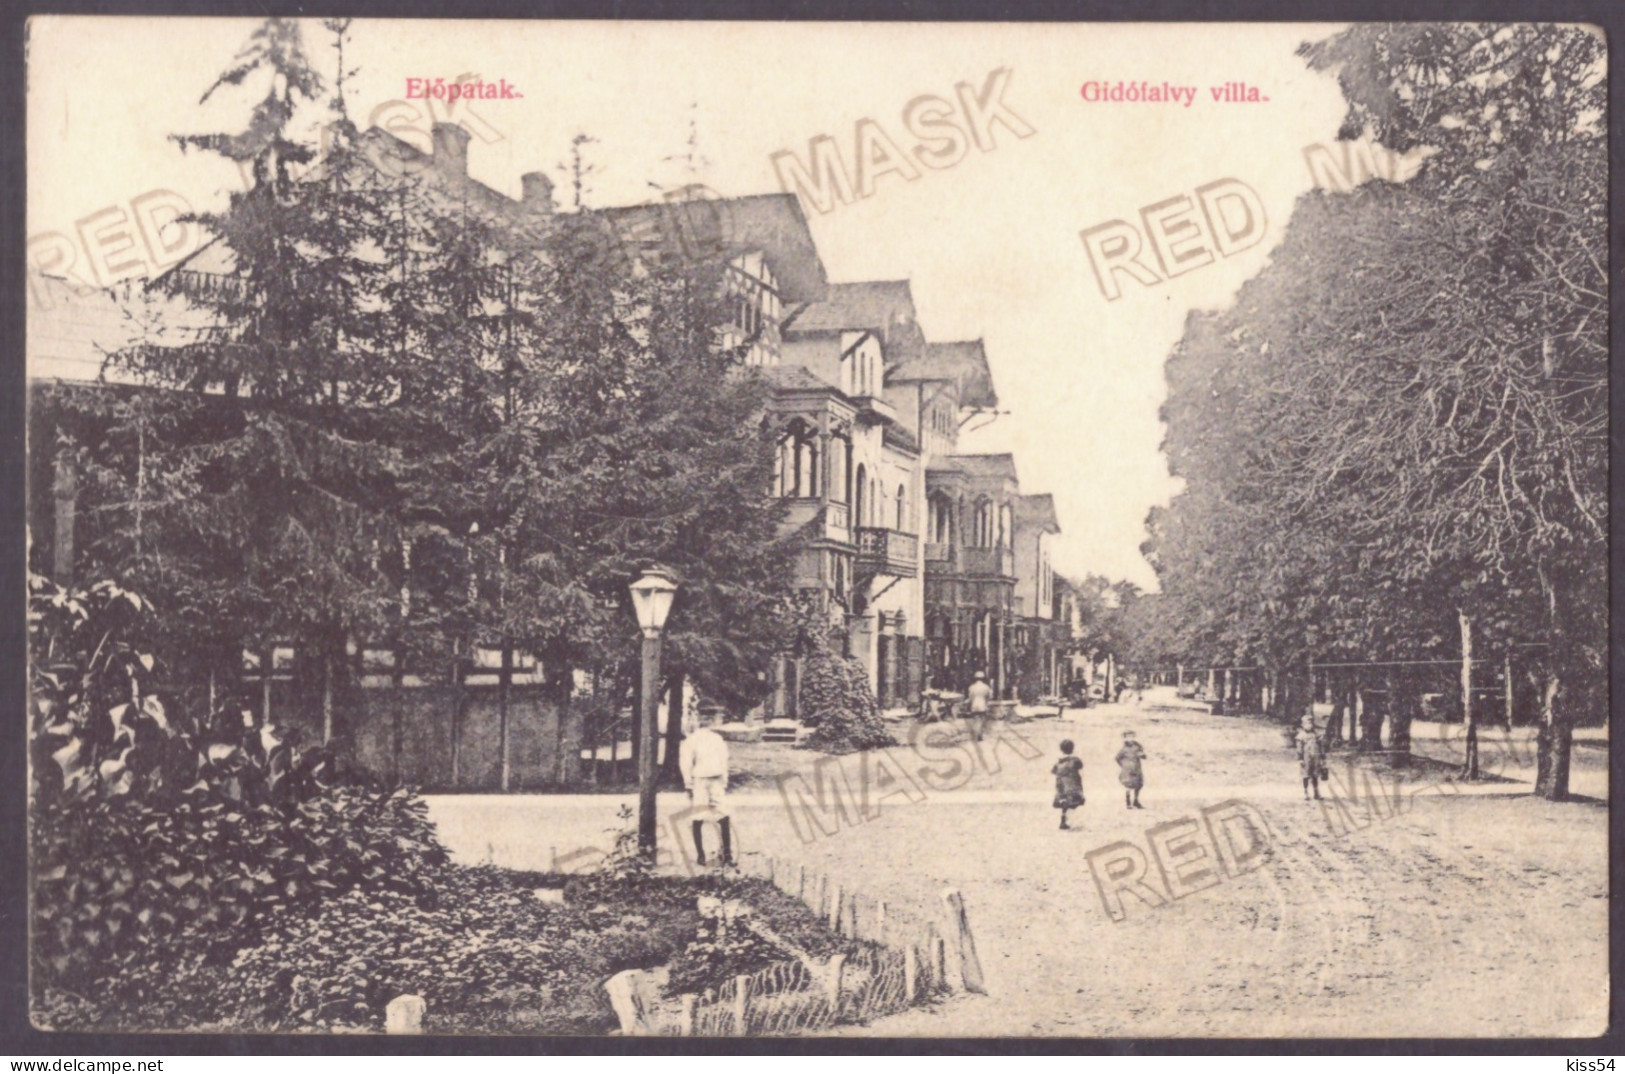 RO 38 - 23118 VALCELE, Covasna, Romania - Old Postcard - Used - 1911 - Roemenië